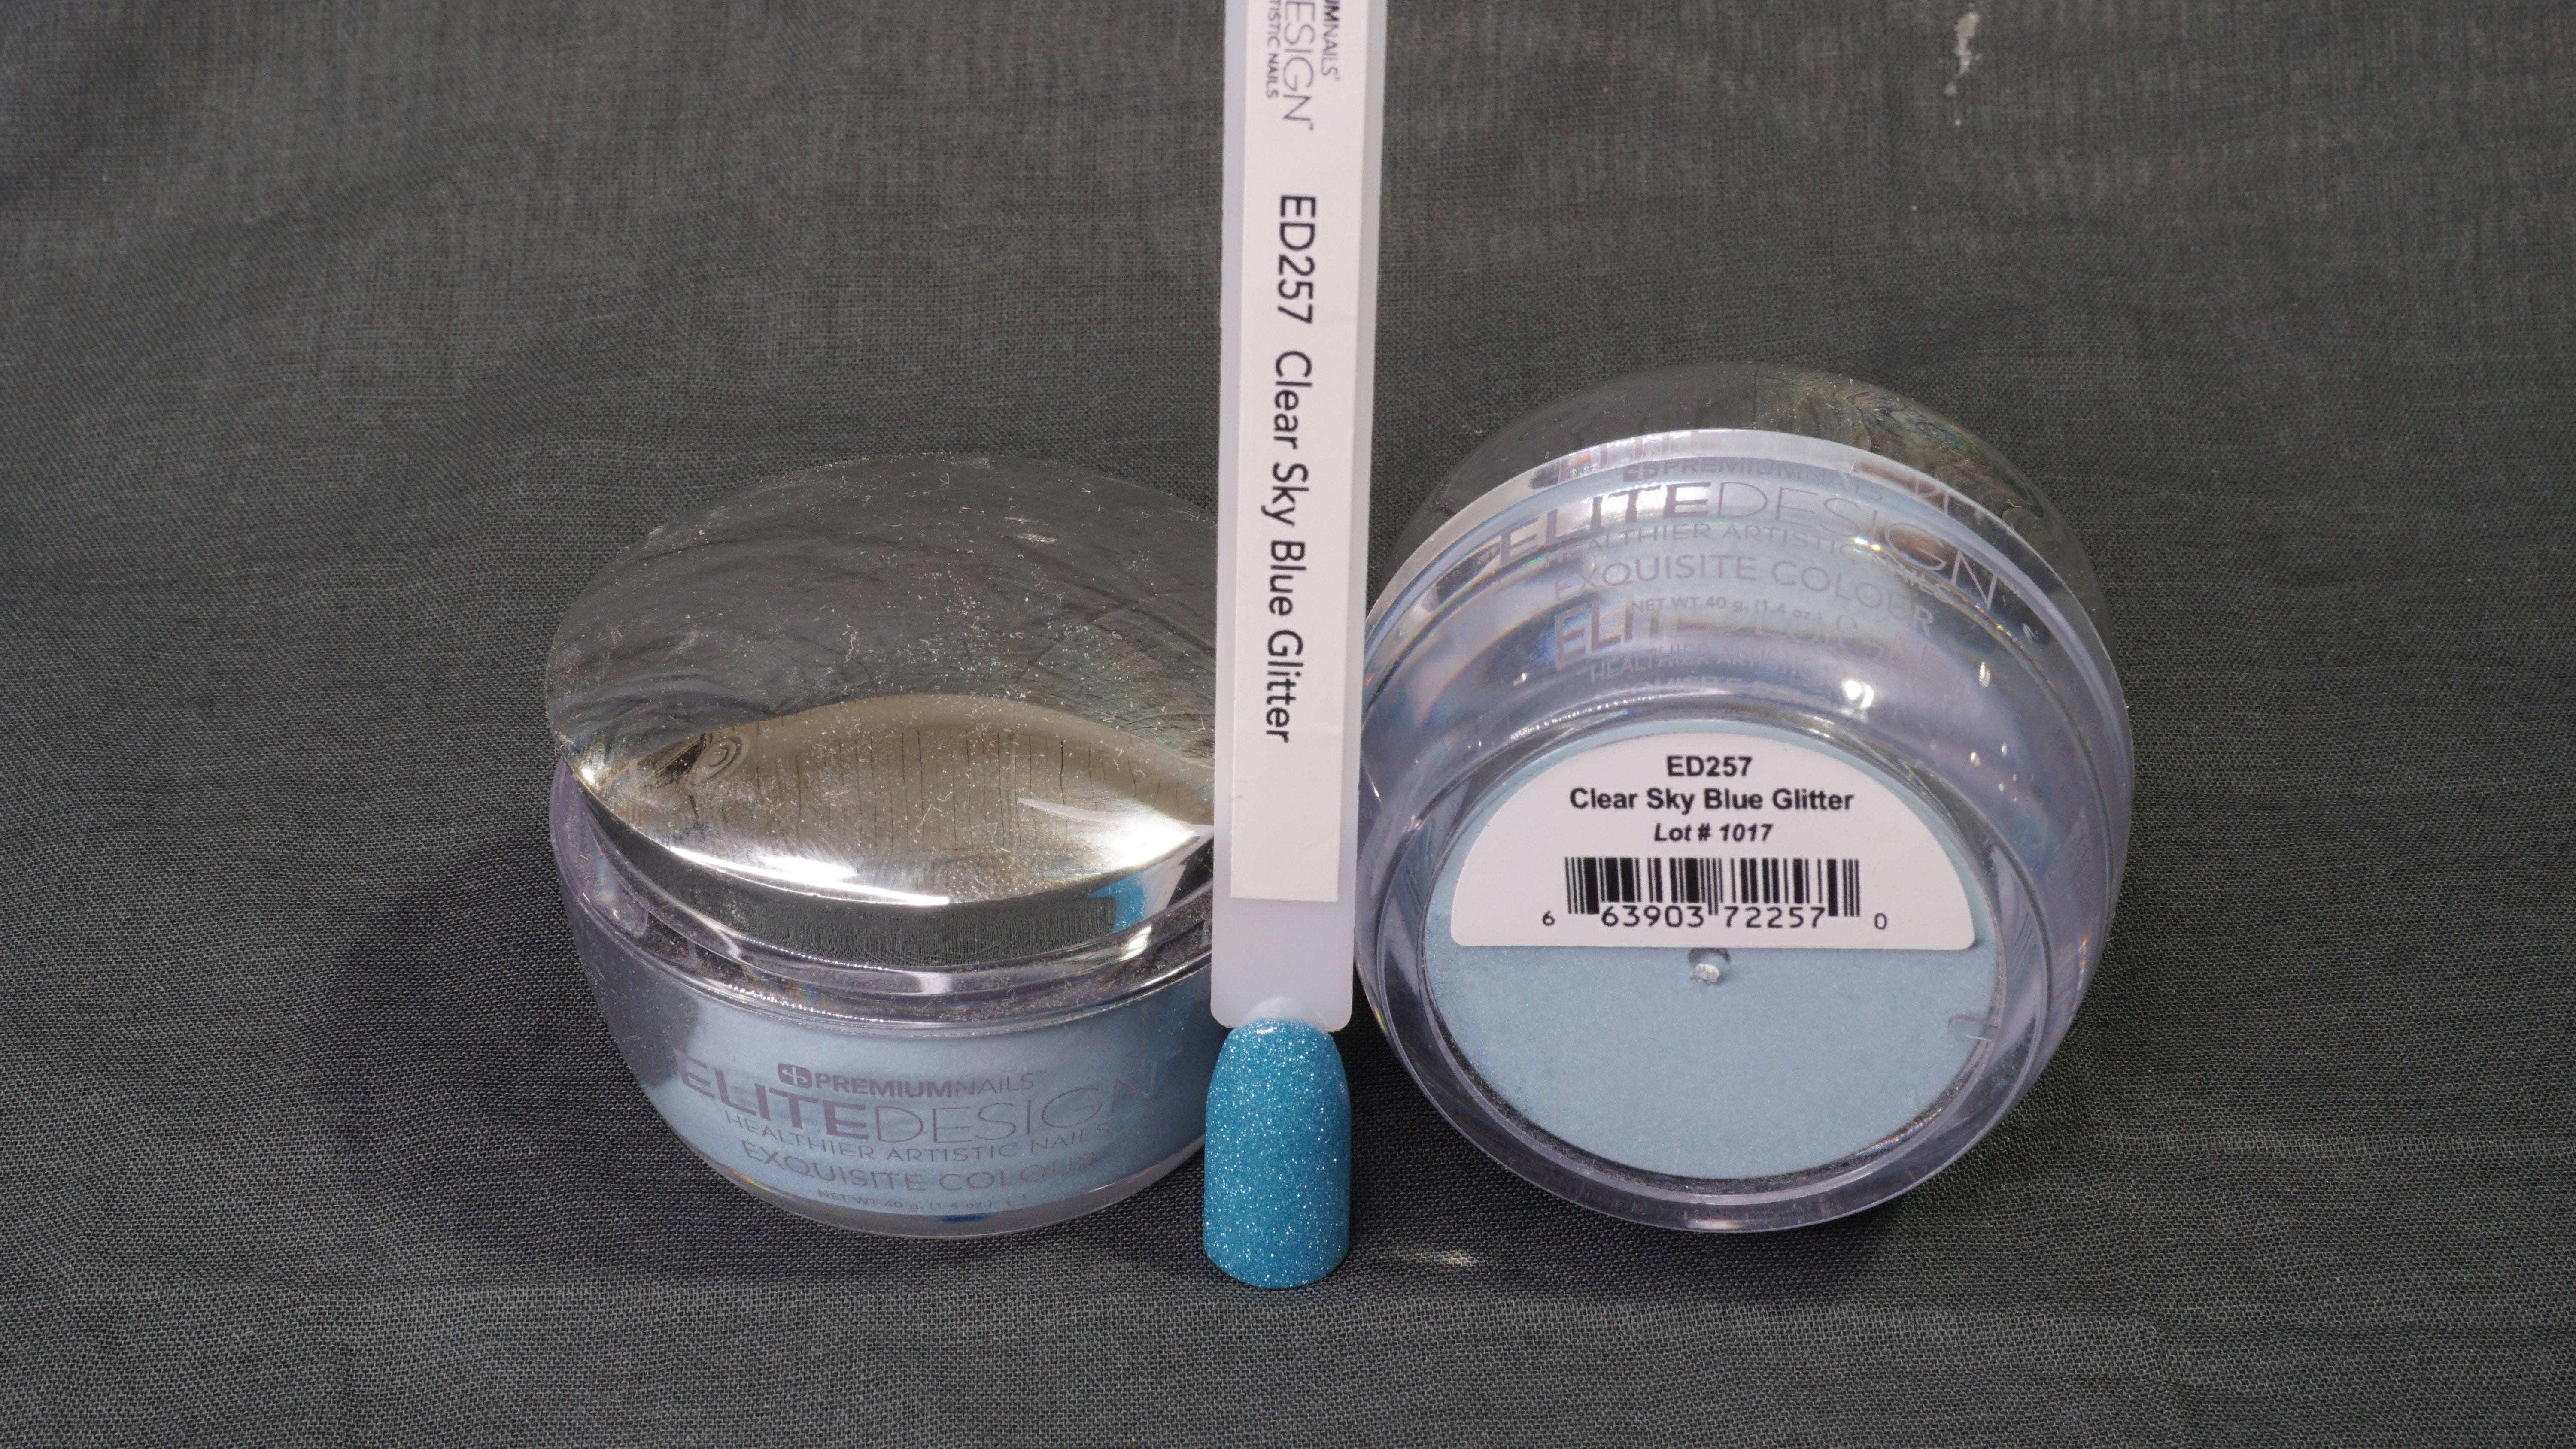 ED257 Clear Sky Blue Glitter 40 g - ELITEDESIGN PREMIUM NAILS Dip Powder